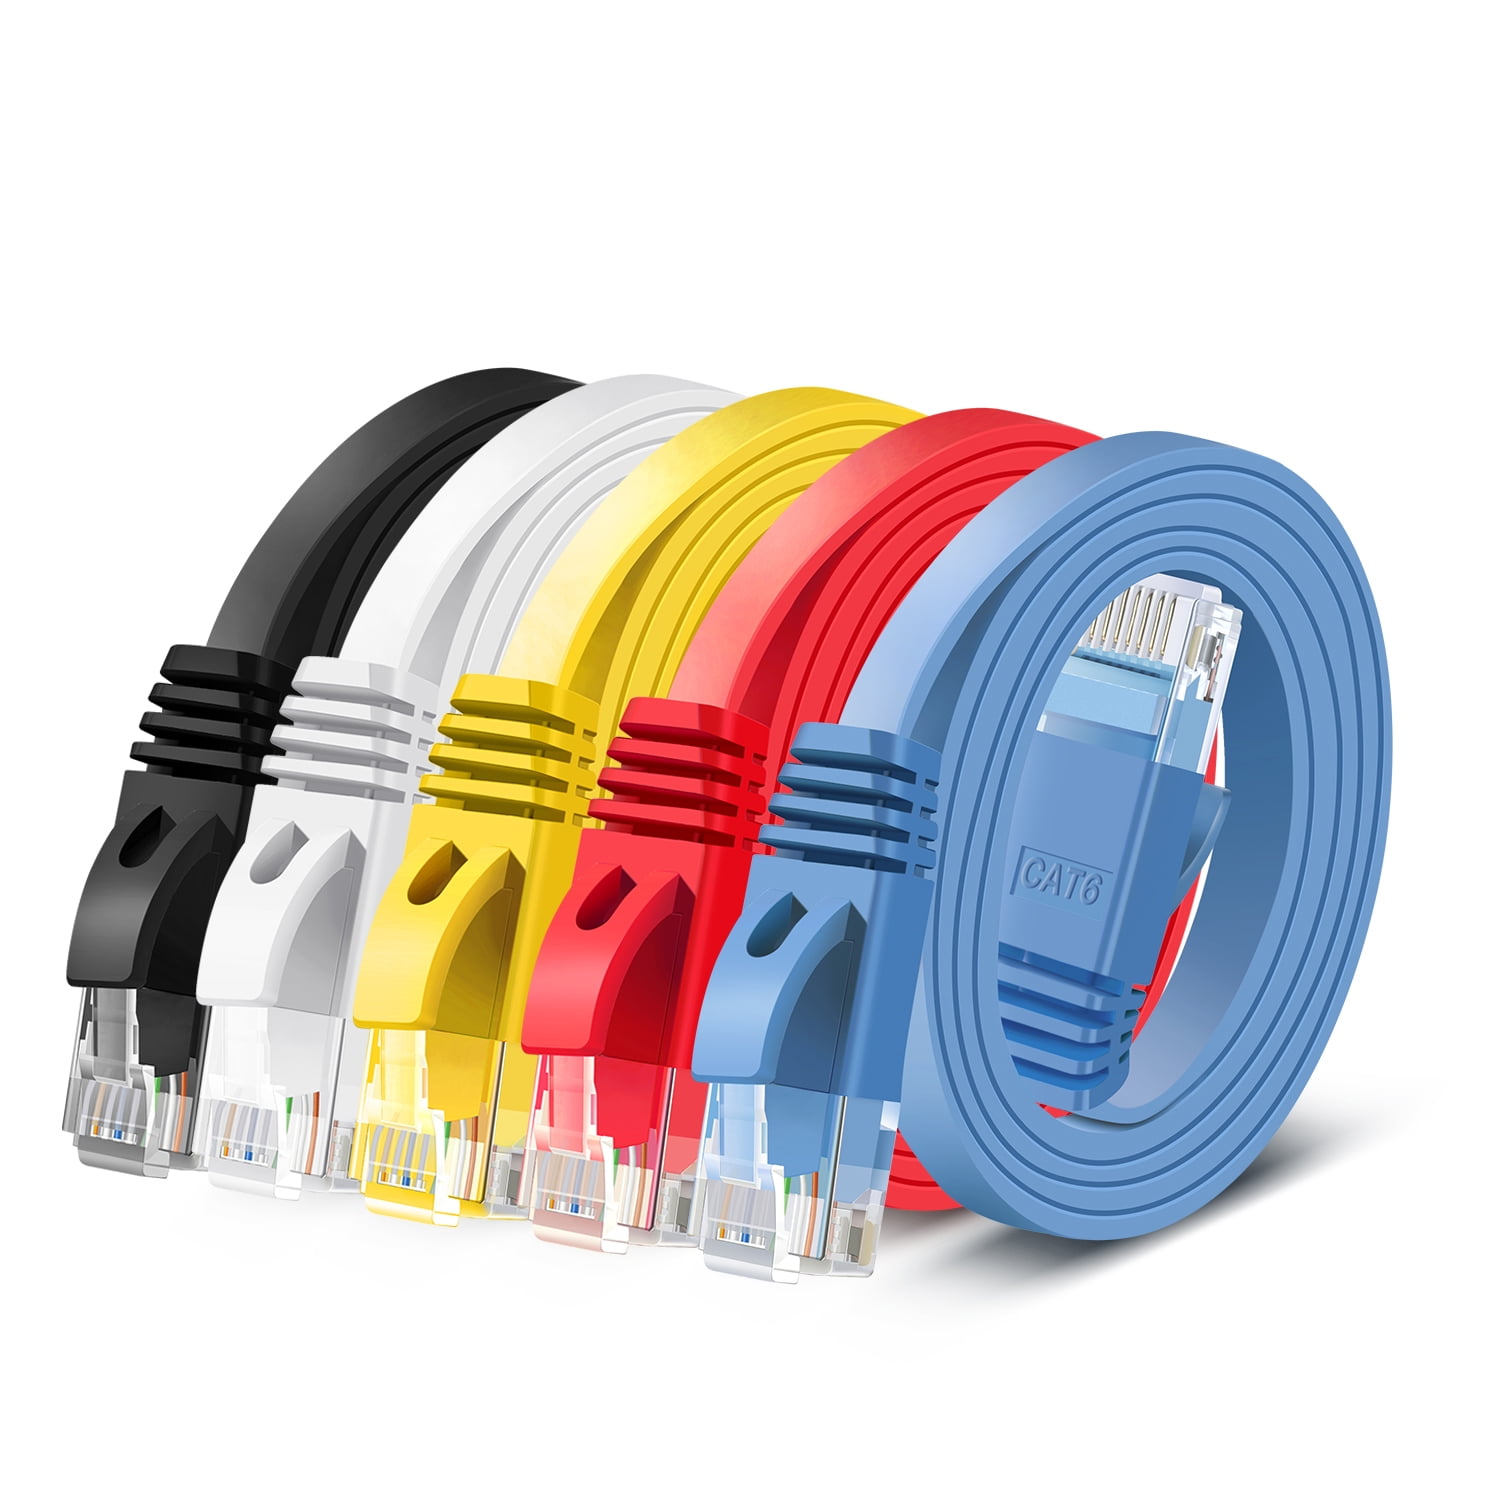 Black 3-foot premium Cat5e Patch LAN Ethernet Network Cable 10 Pack 